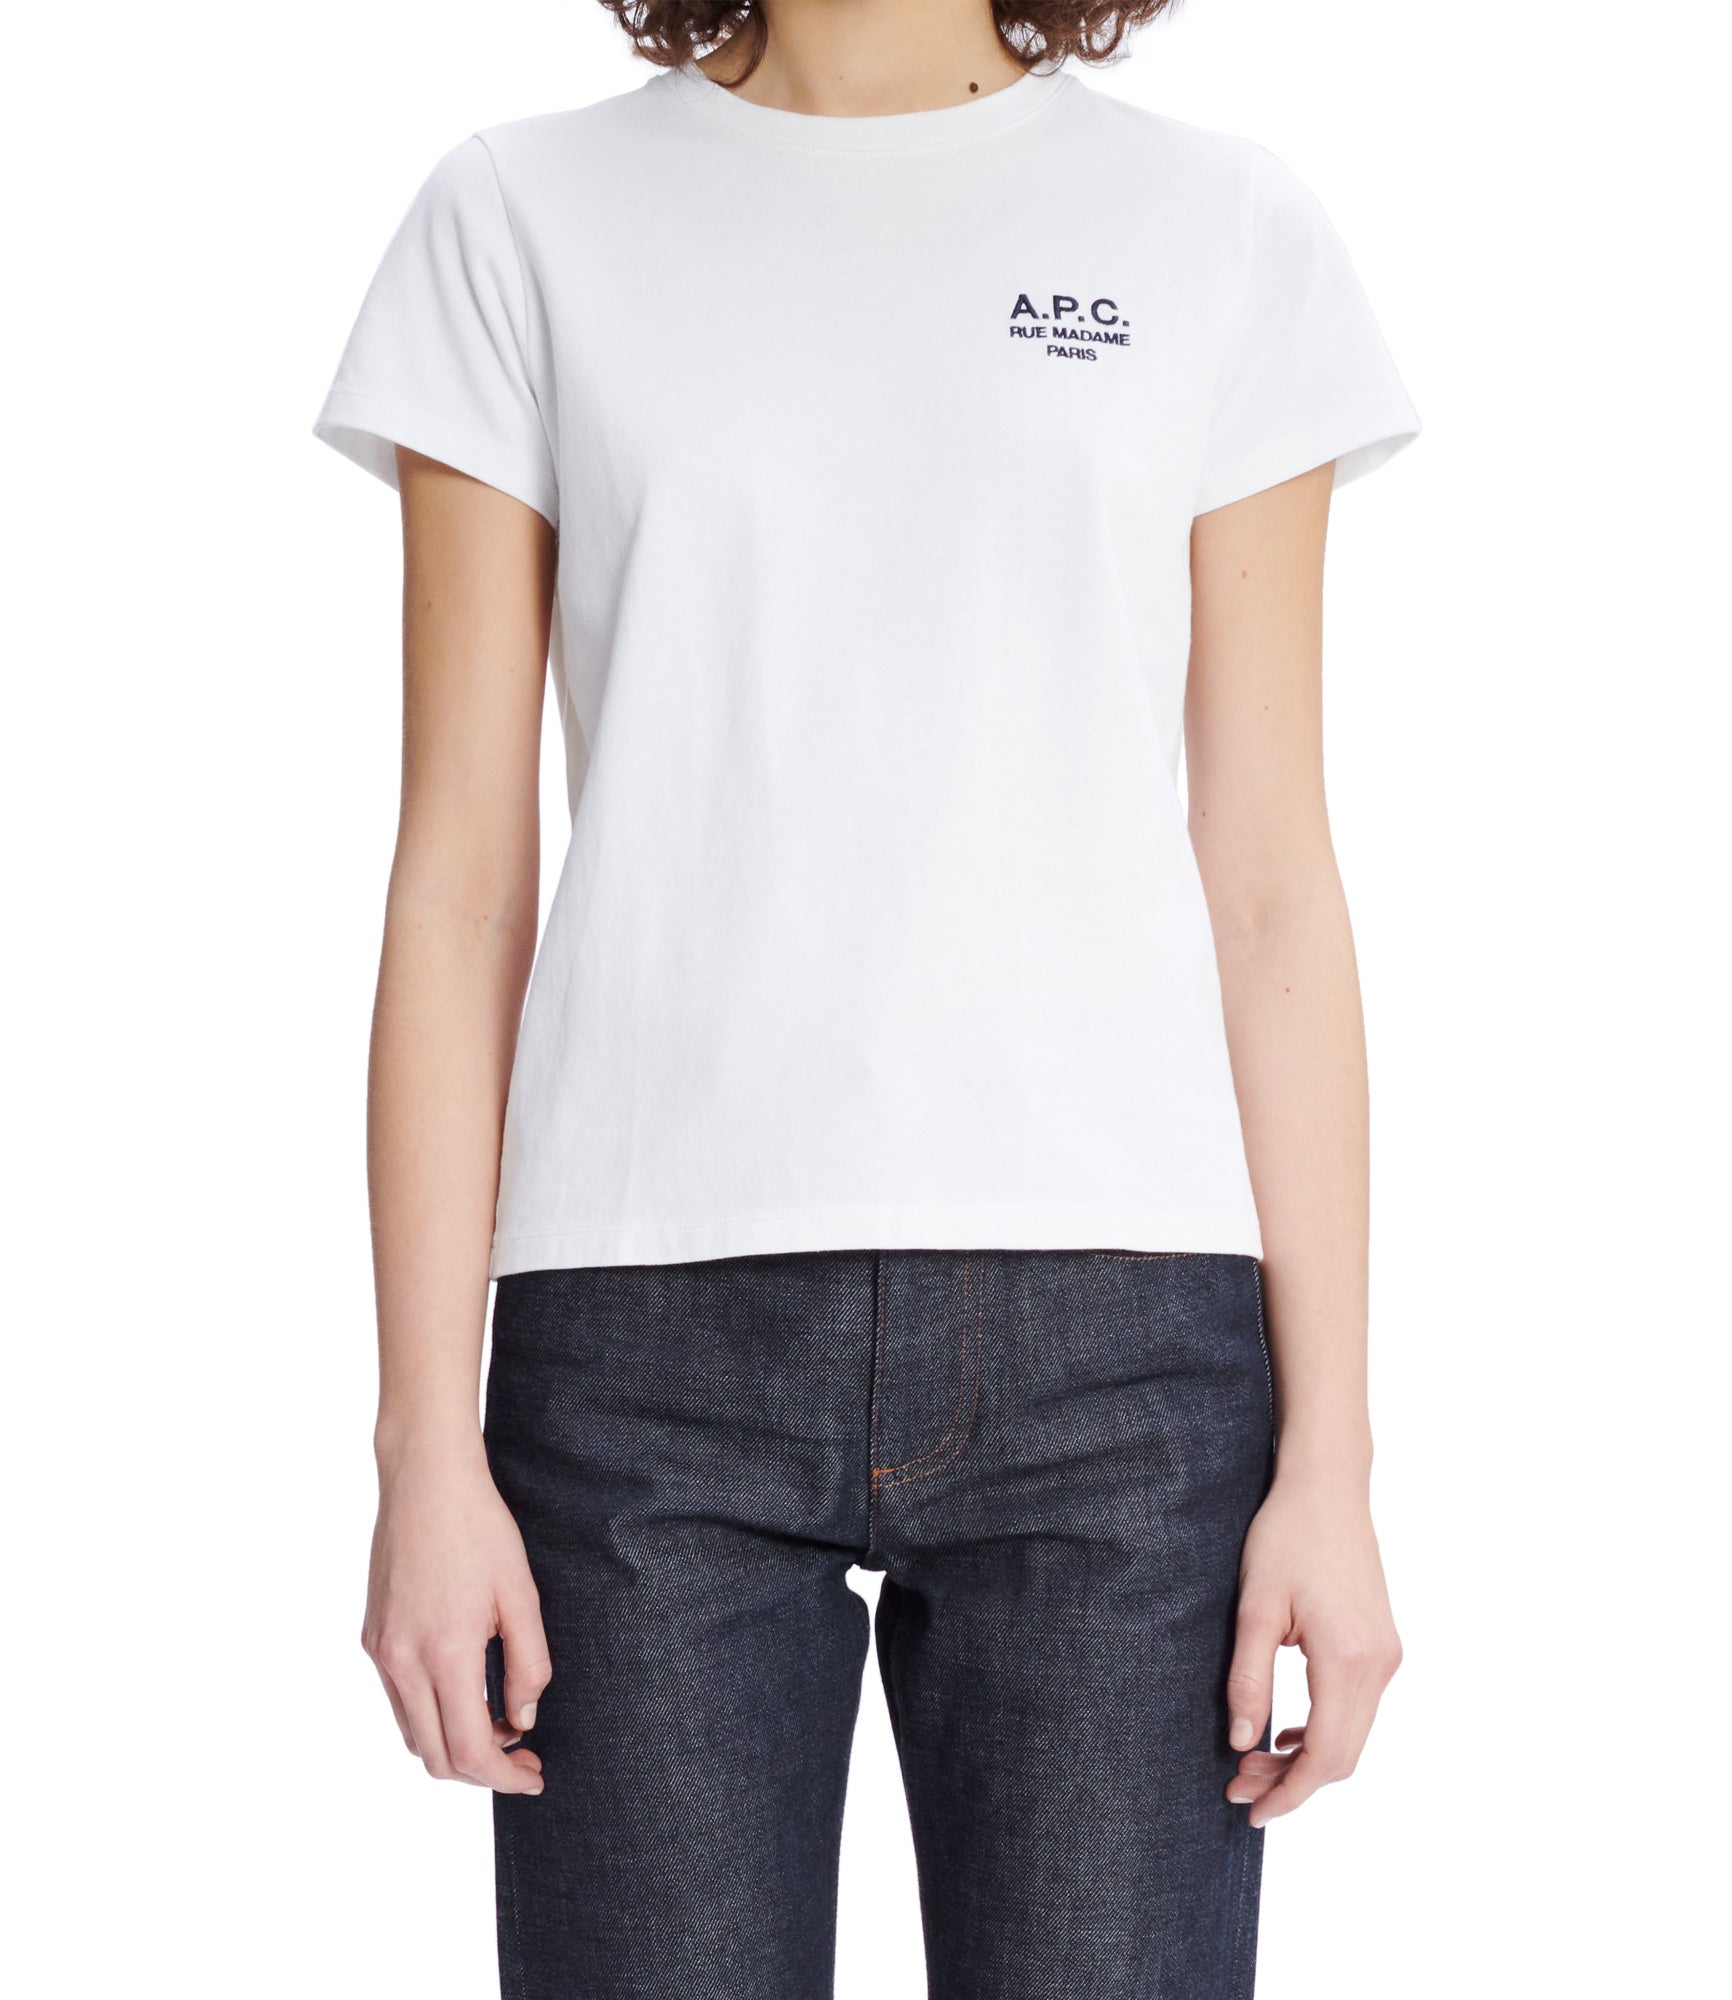 Denise T-shirt | Heavyweight organic cotton with a logo